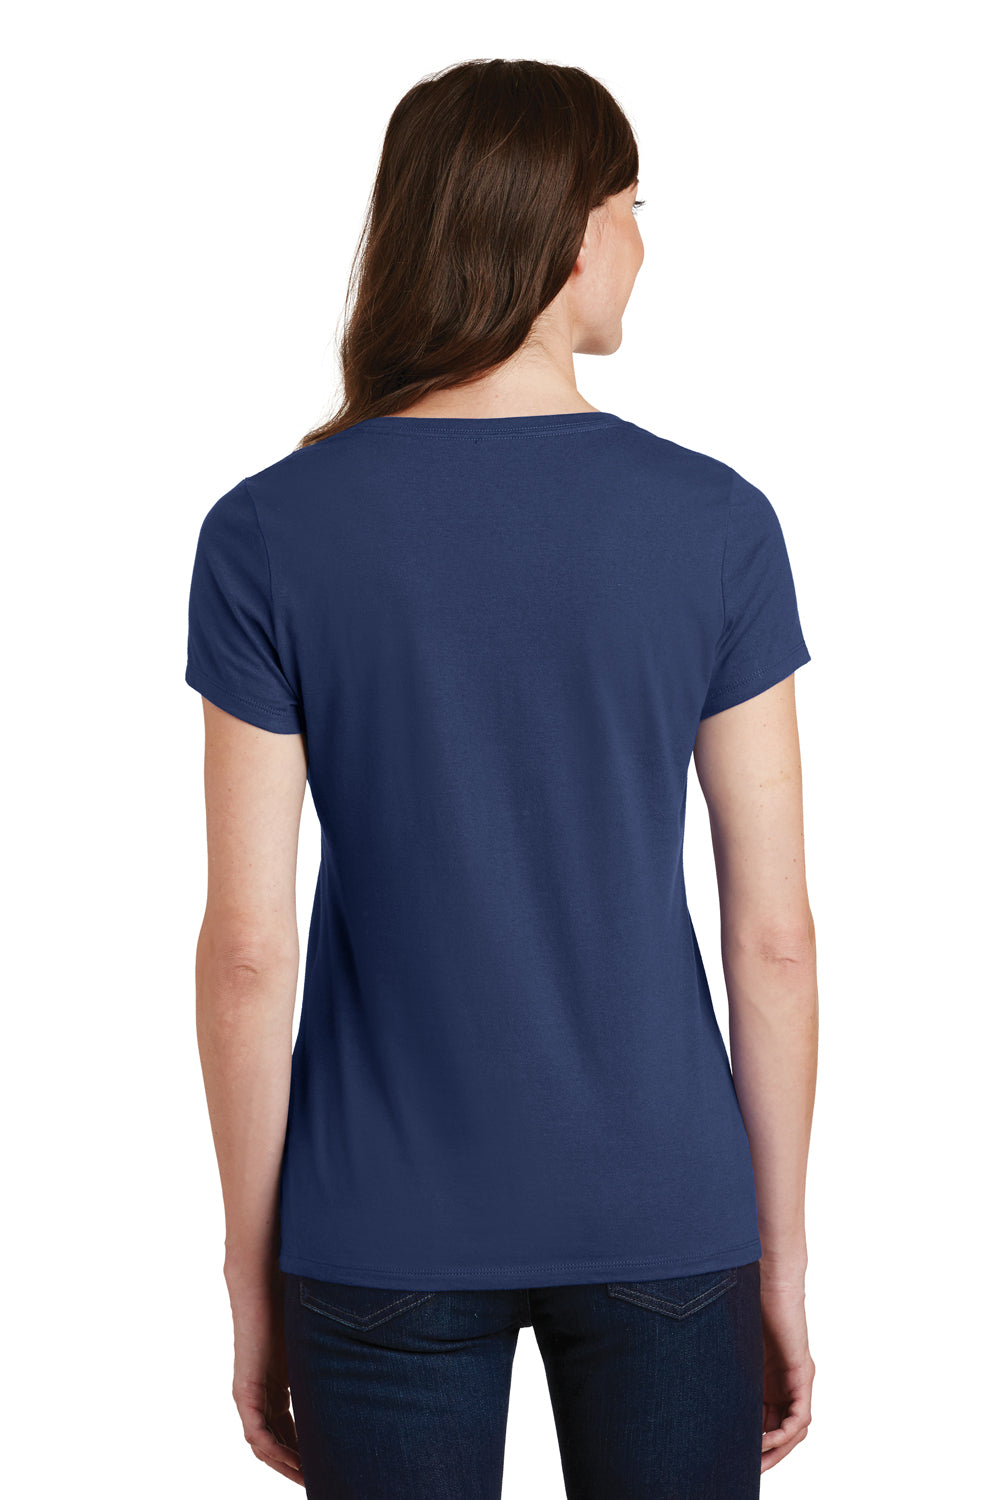 Port & Company LPC450V Womens Fan Favorite Short Sleeve V-Neck T-Shirt Navy Blue Back